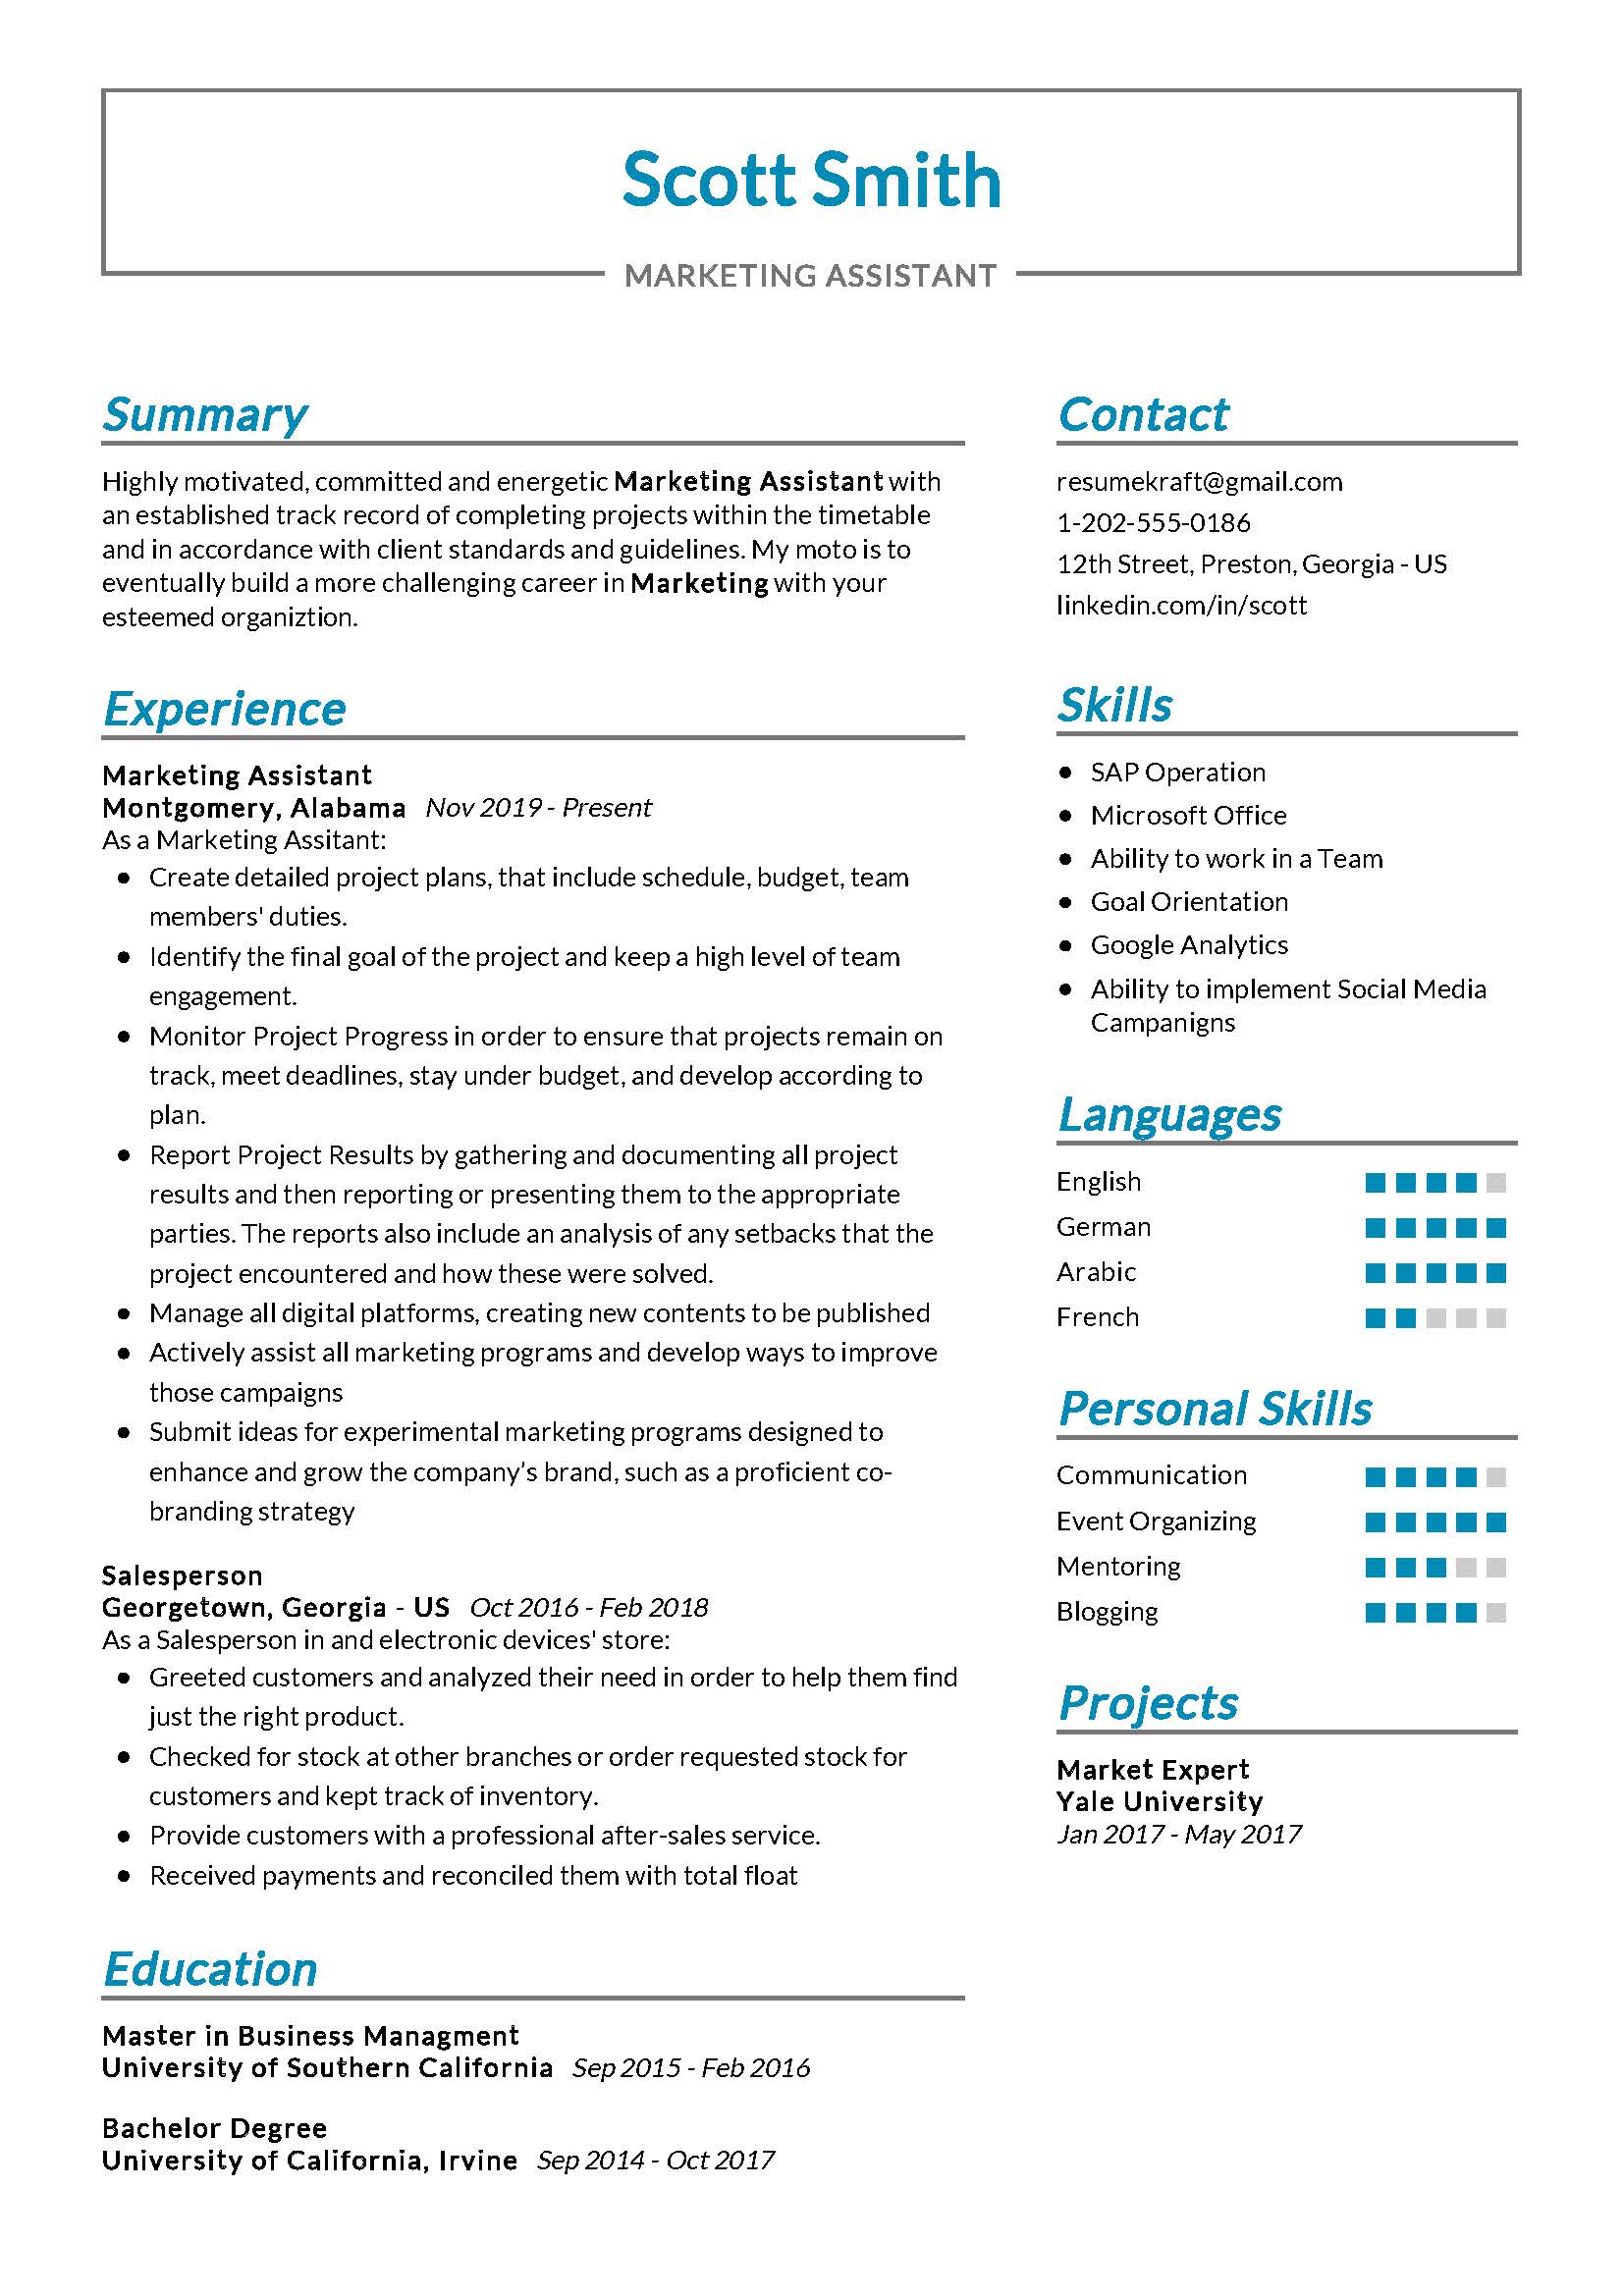 resume job description marketing assistant